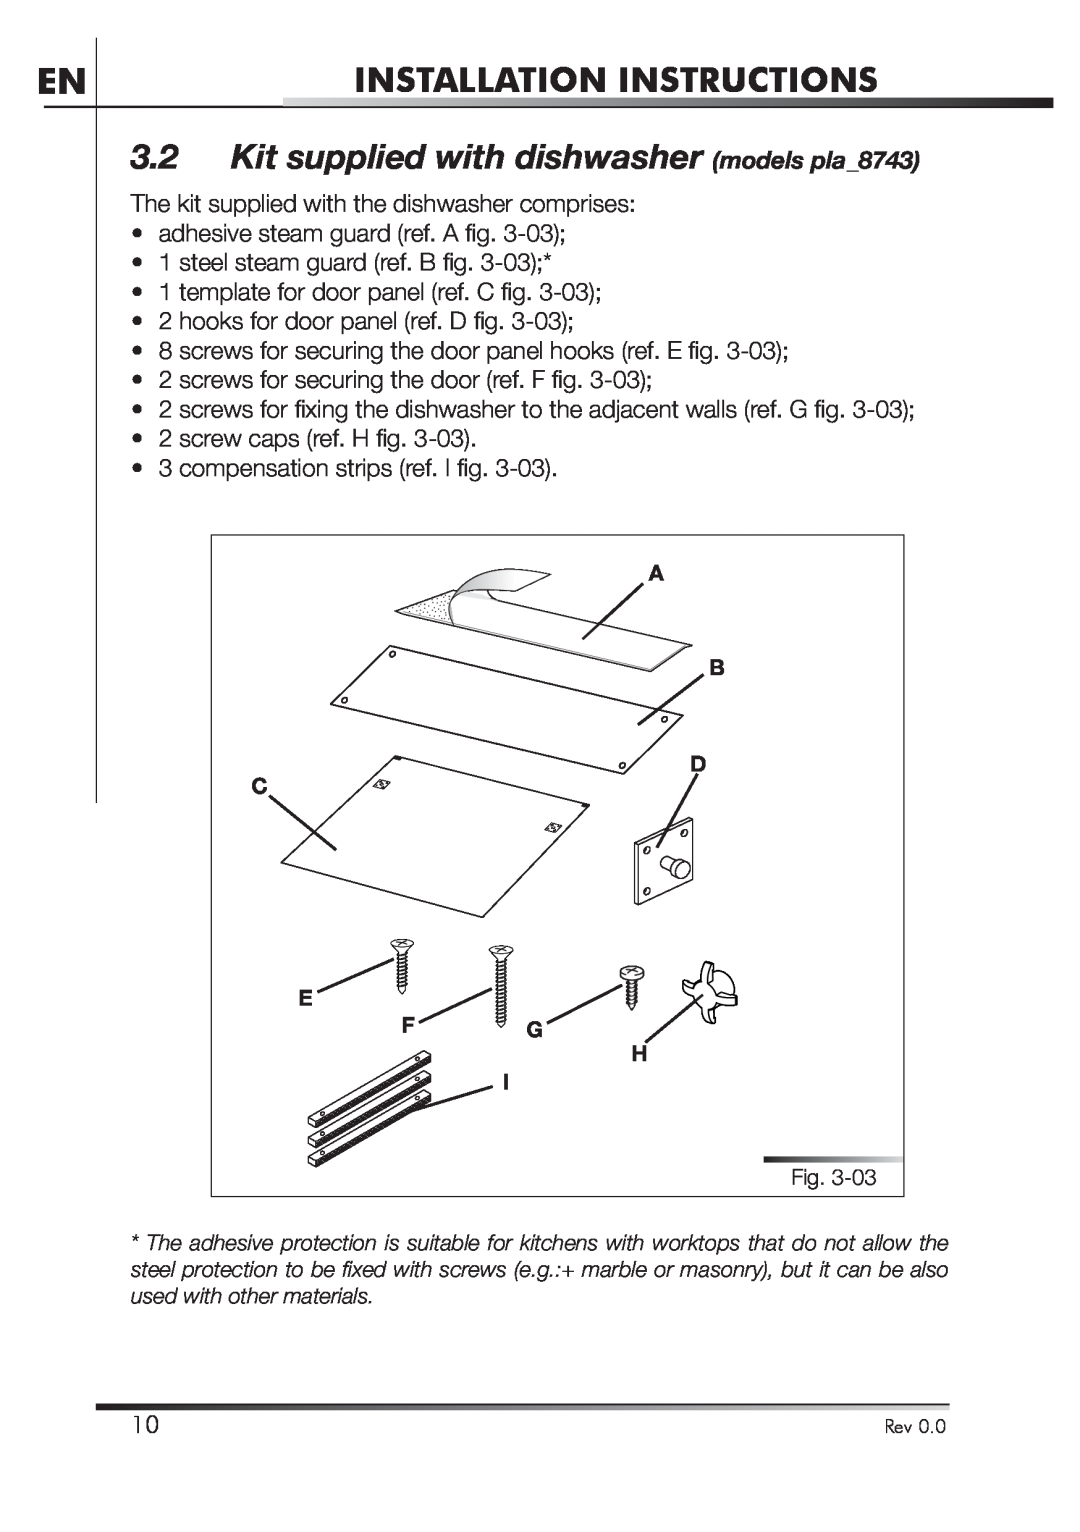 Smeg STA4645U manual Kit supplied with dishwasher models pla8743, Installation Instructions 